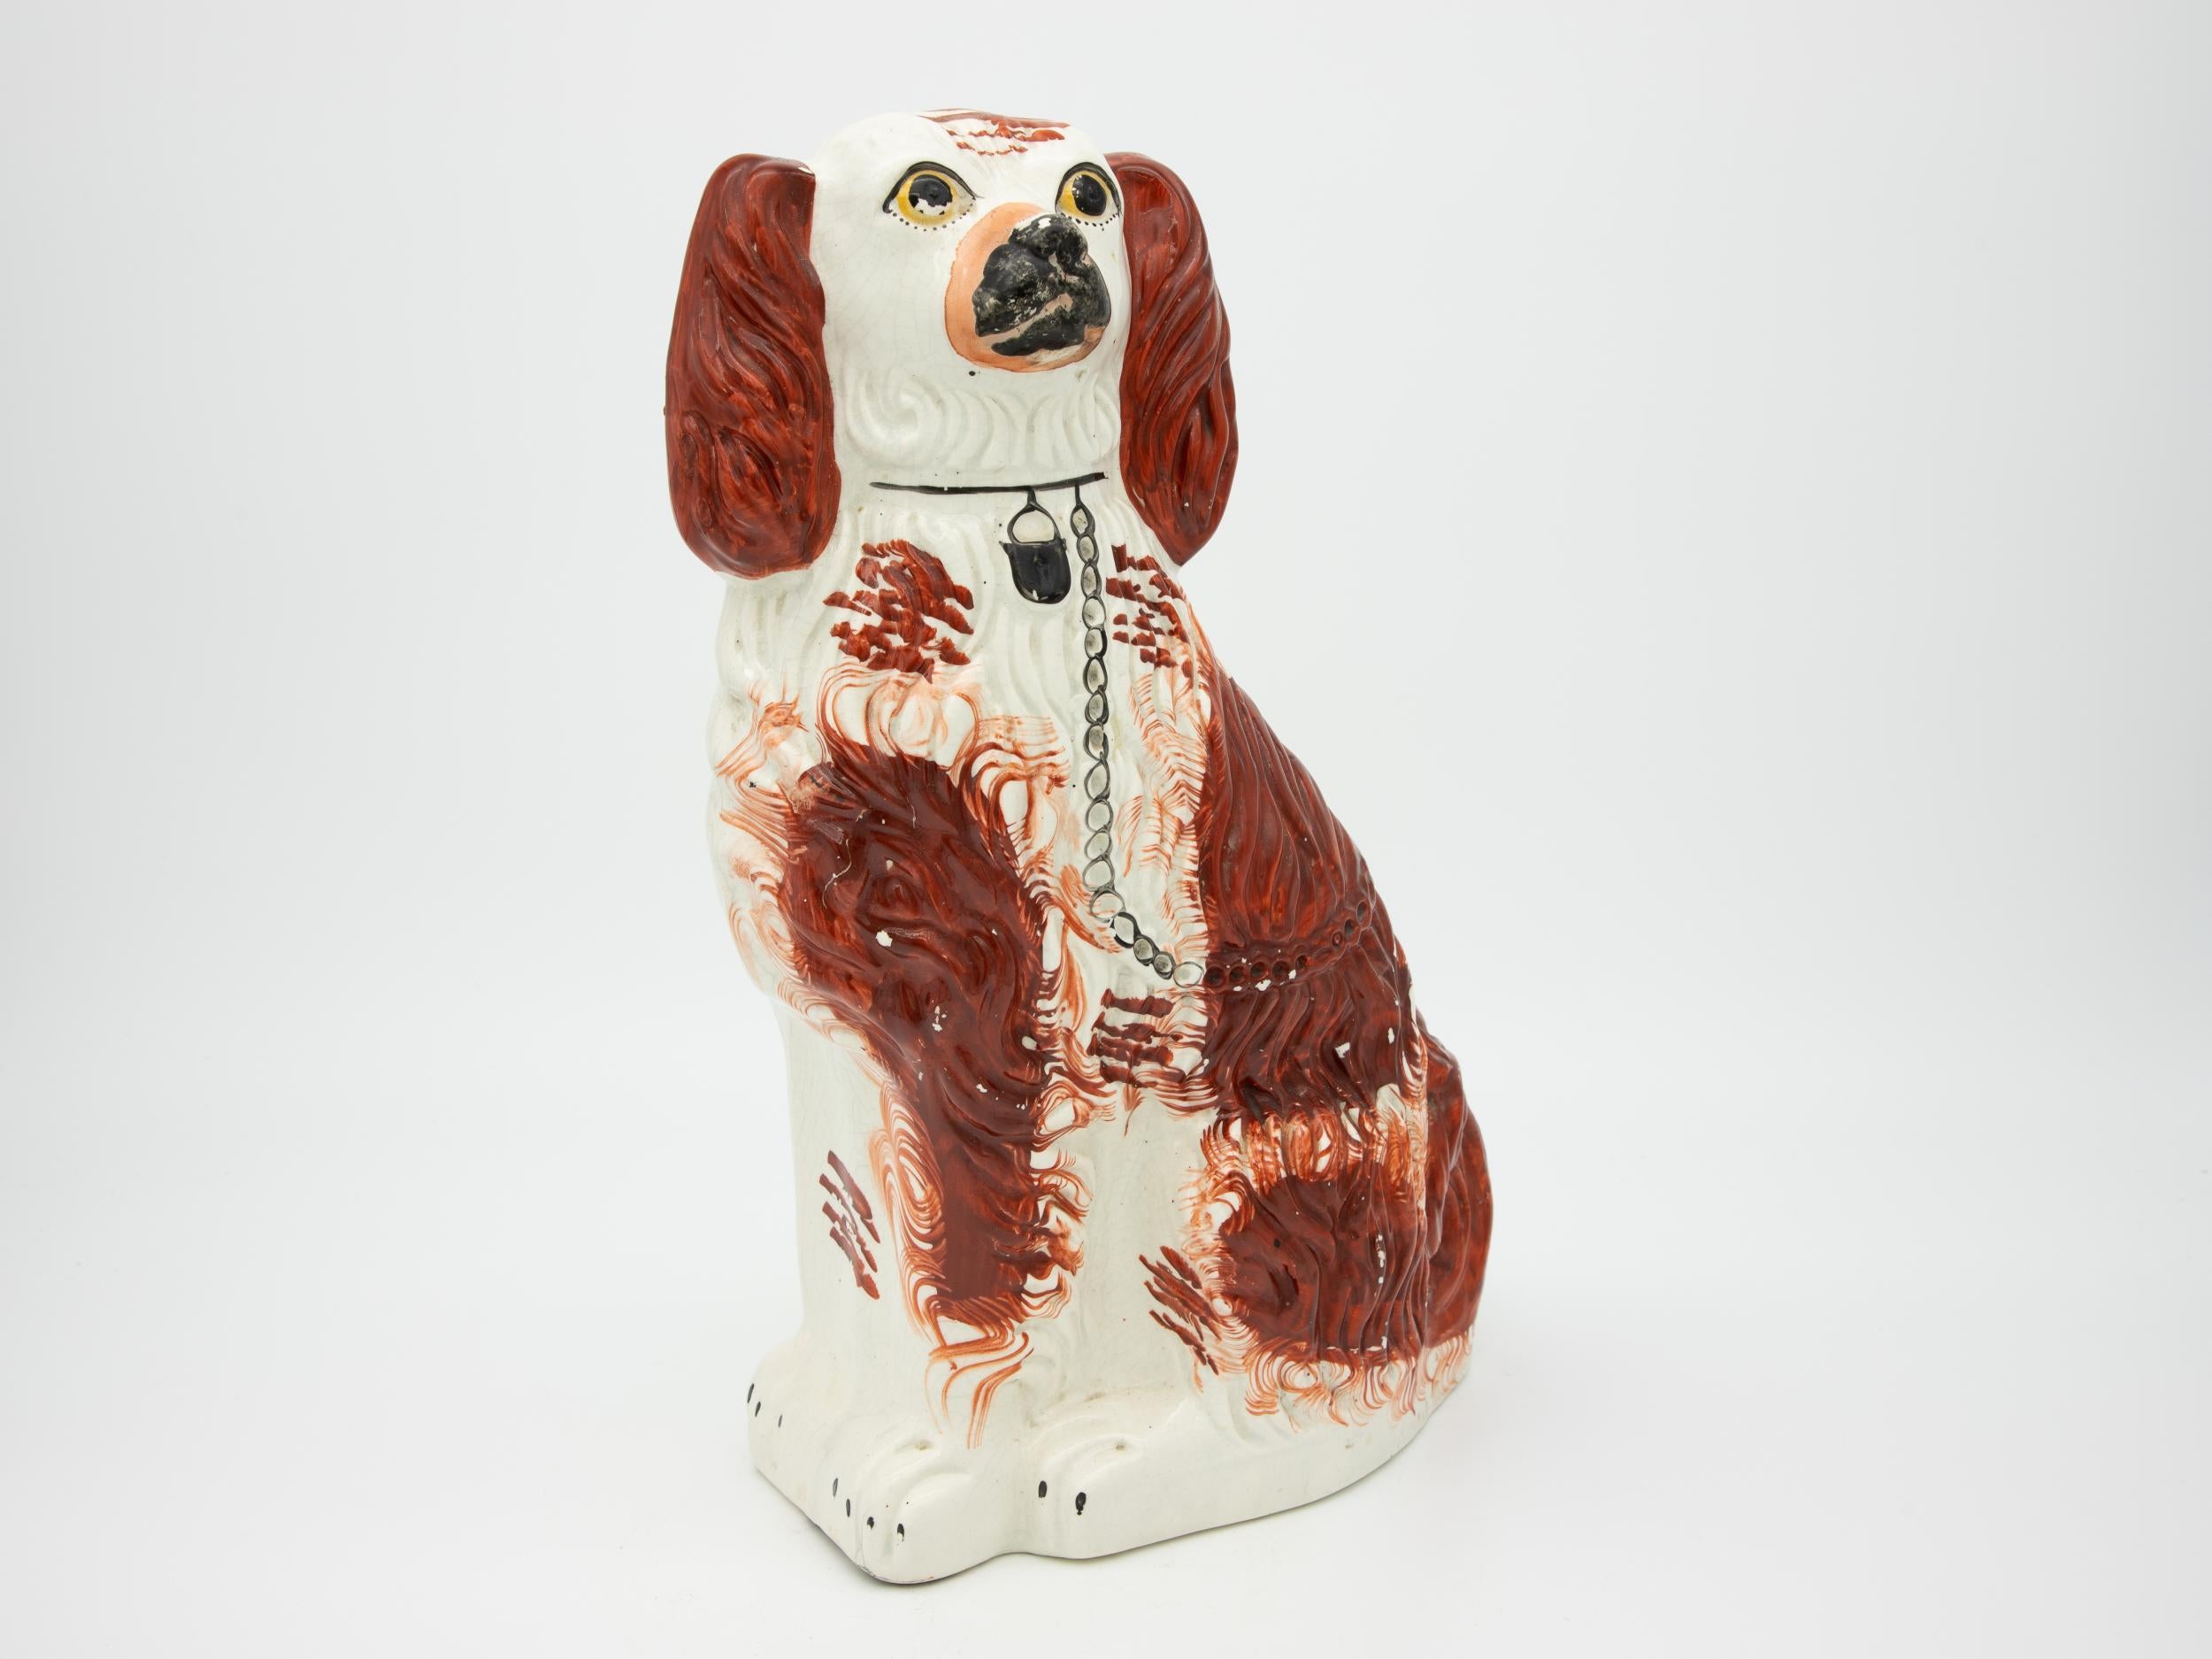 staffordshire dog figurines for sale